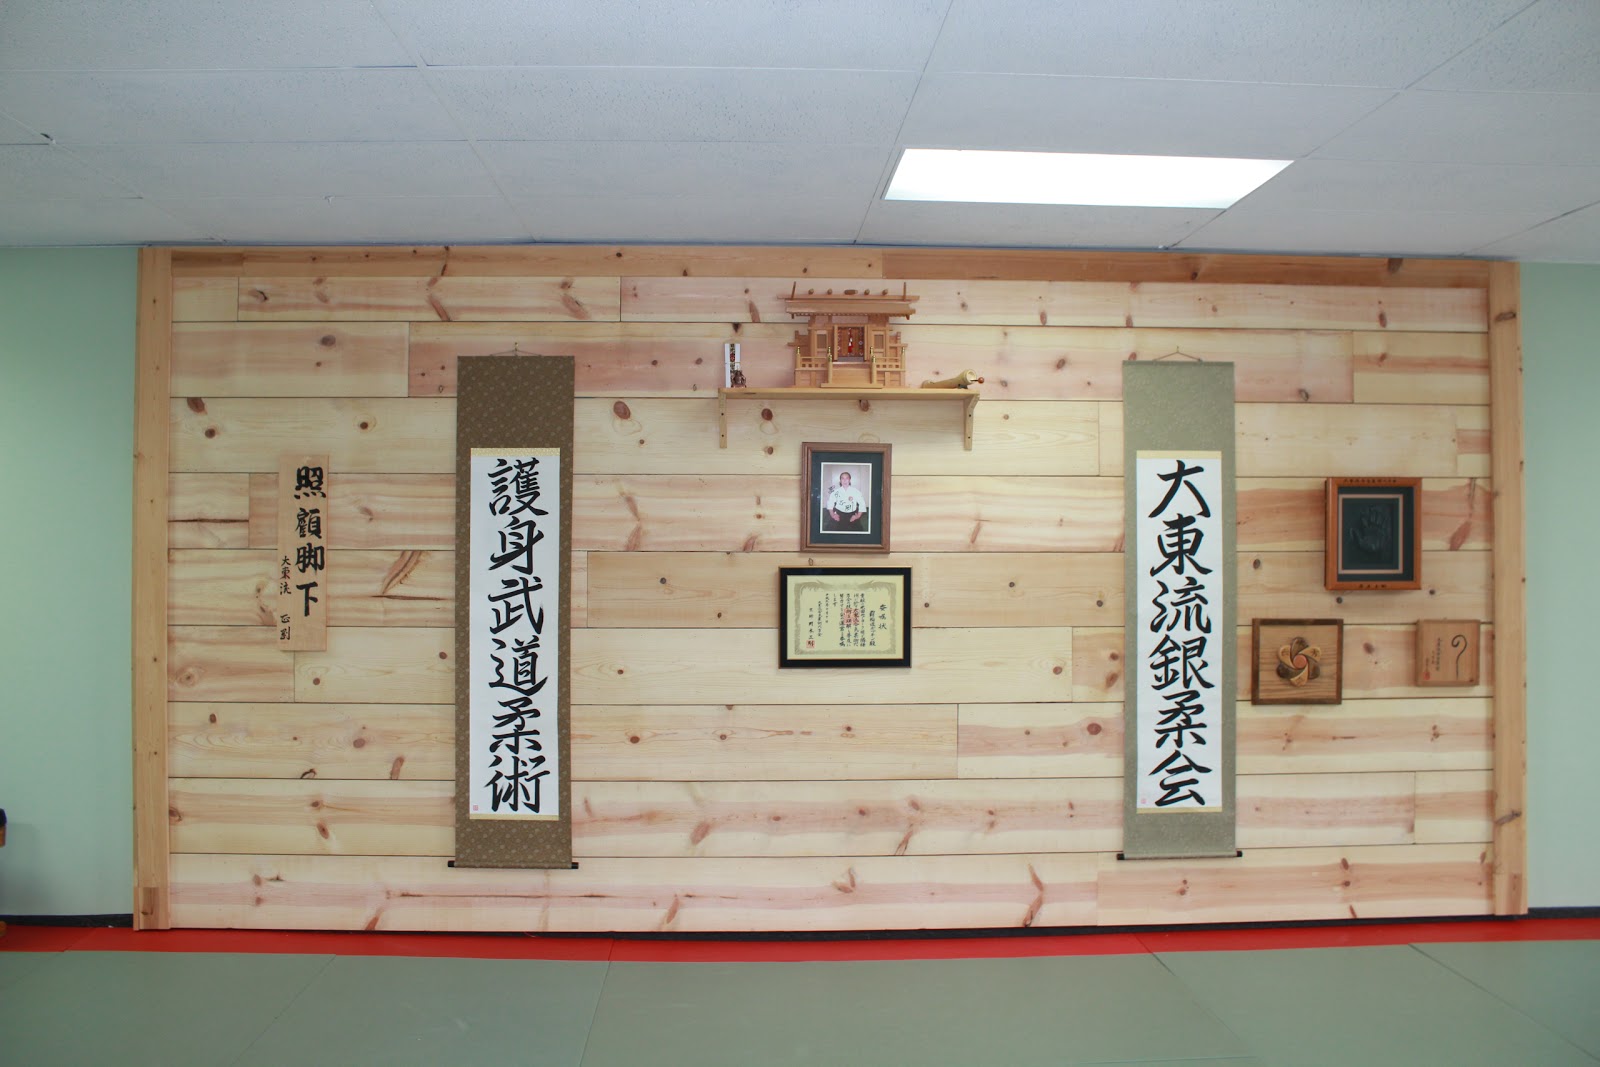 Photo of Popkin-Brogna Jujitsu Center in West Hempstead City, New York, United States - 2 Picture of Point of interest, Establishment, Health, Gym